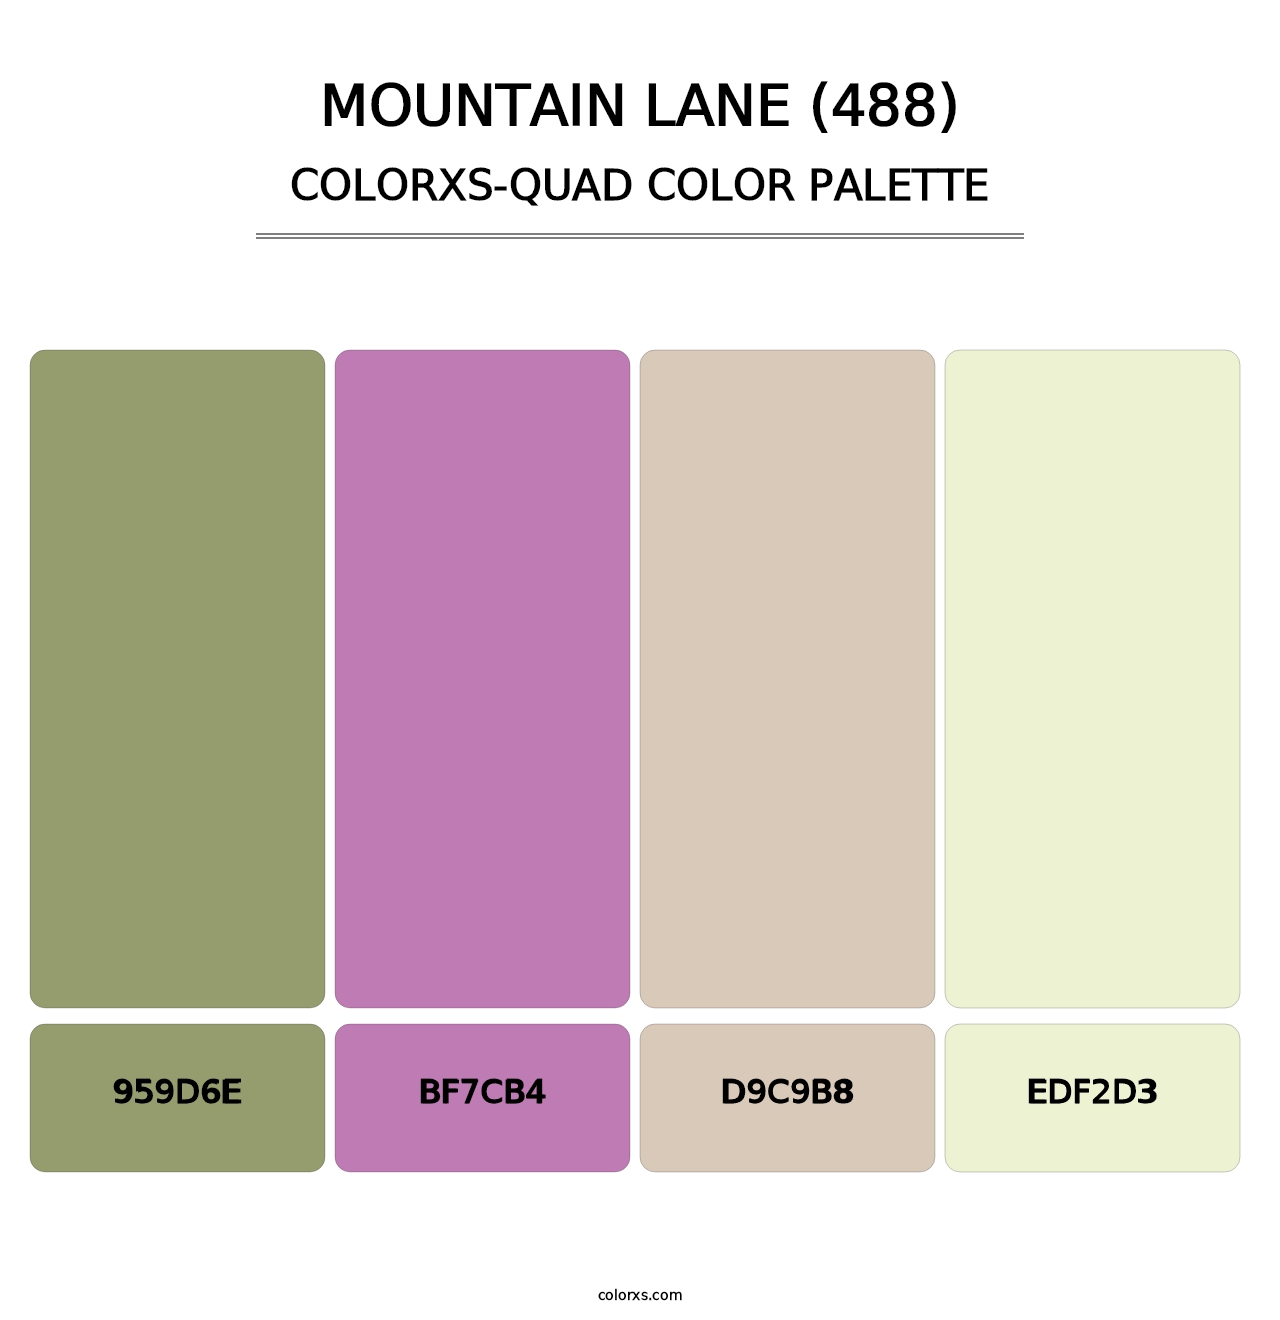 Mountain Lane (488) - Colorxs Quad Palette